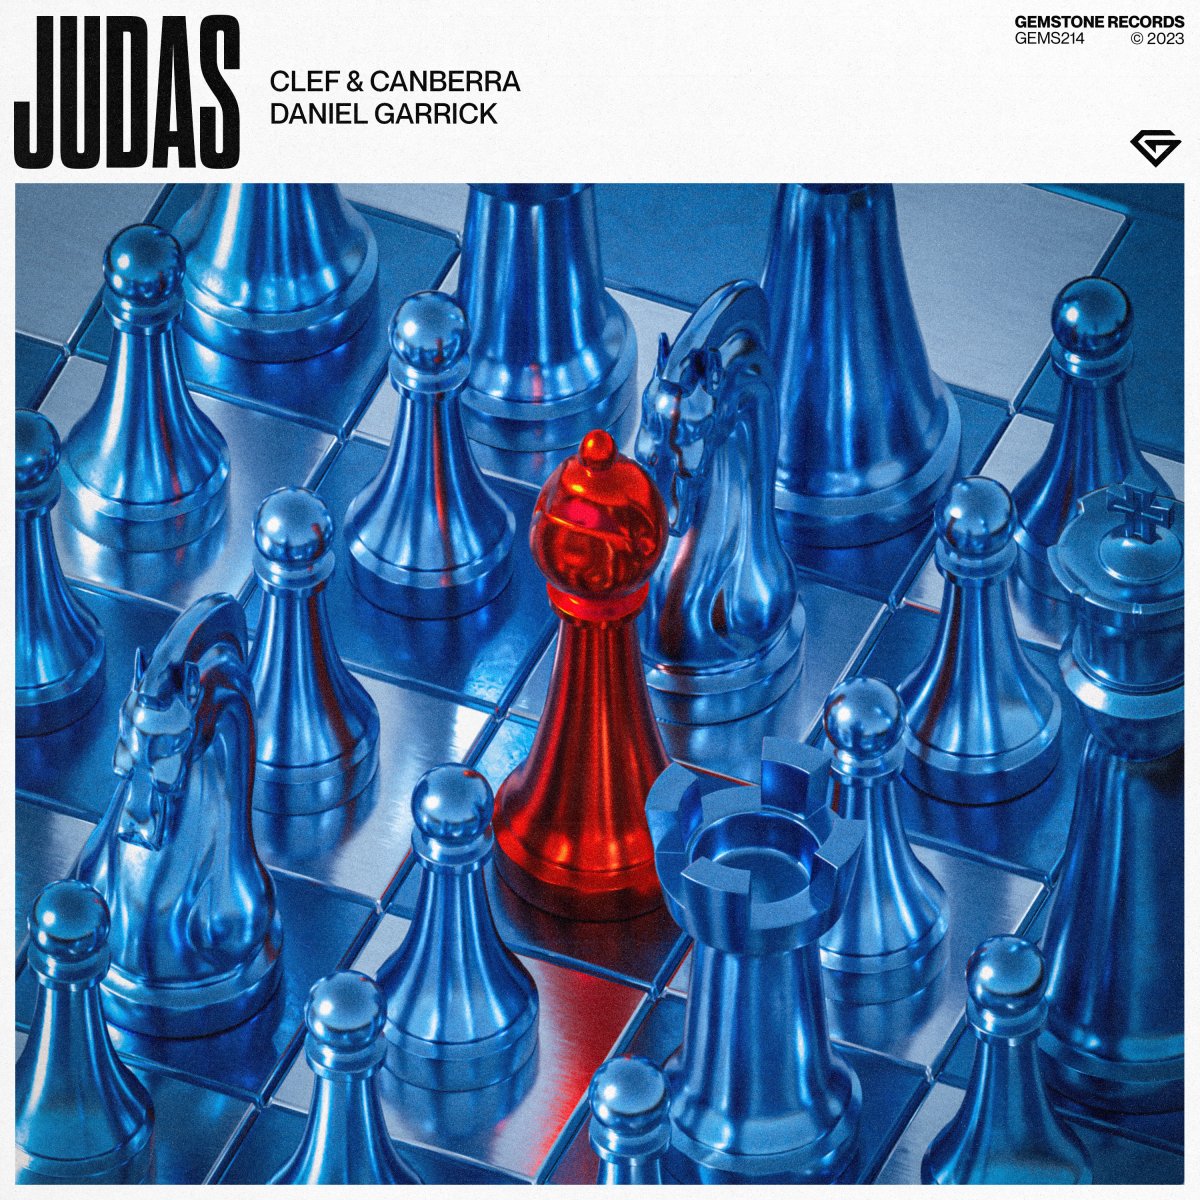 Judas - Clef & Canberra⁠, Daniel Garrick⁠ 